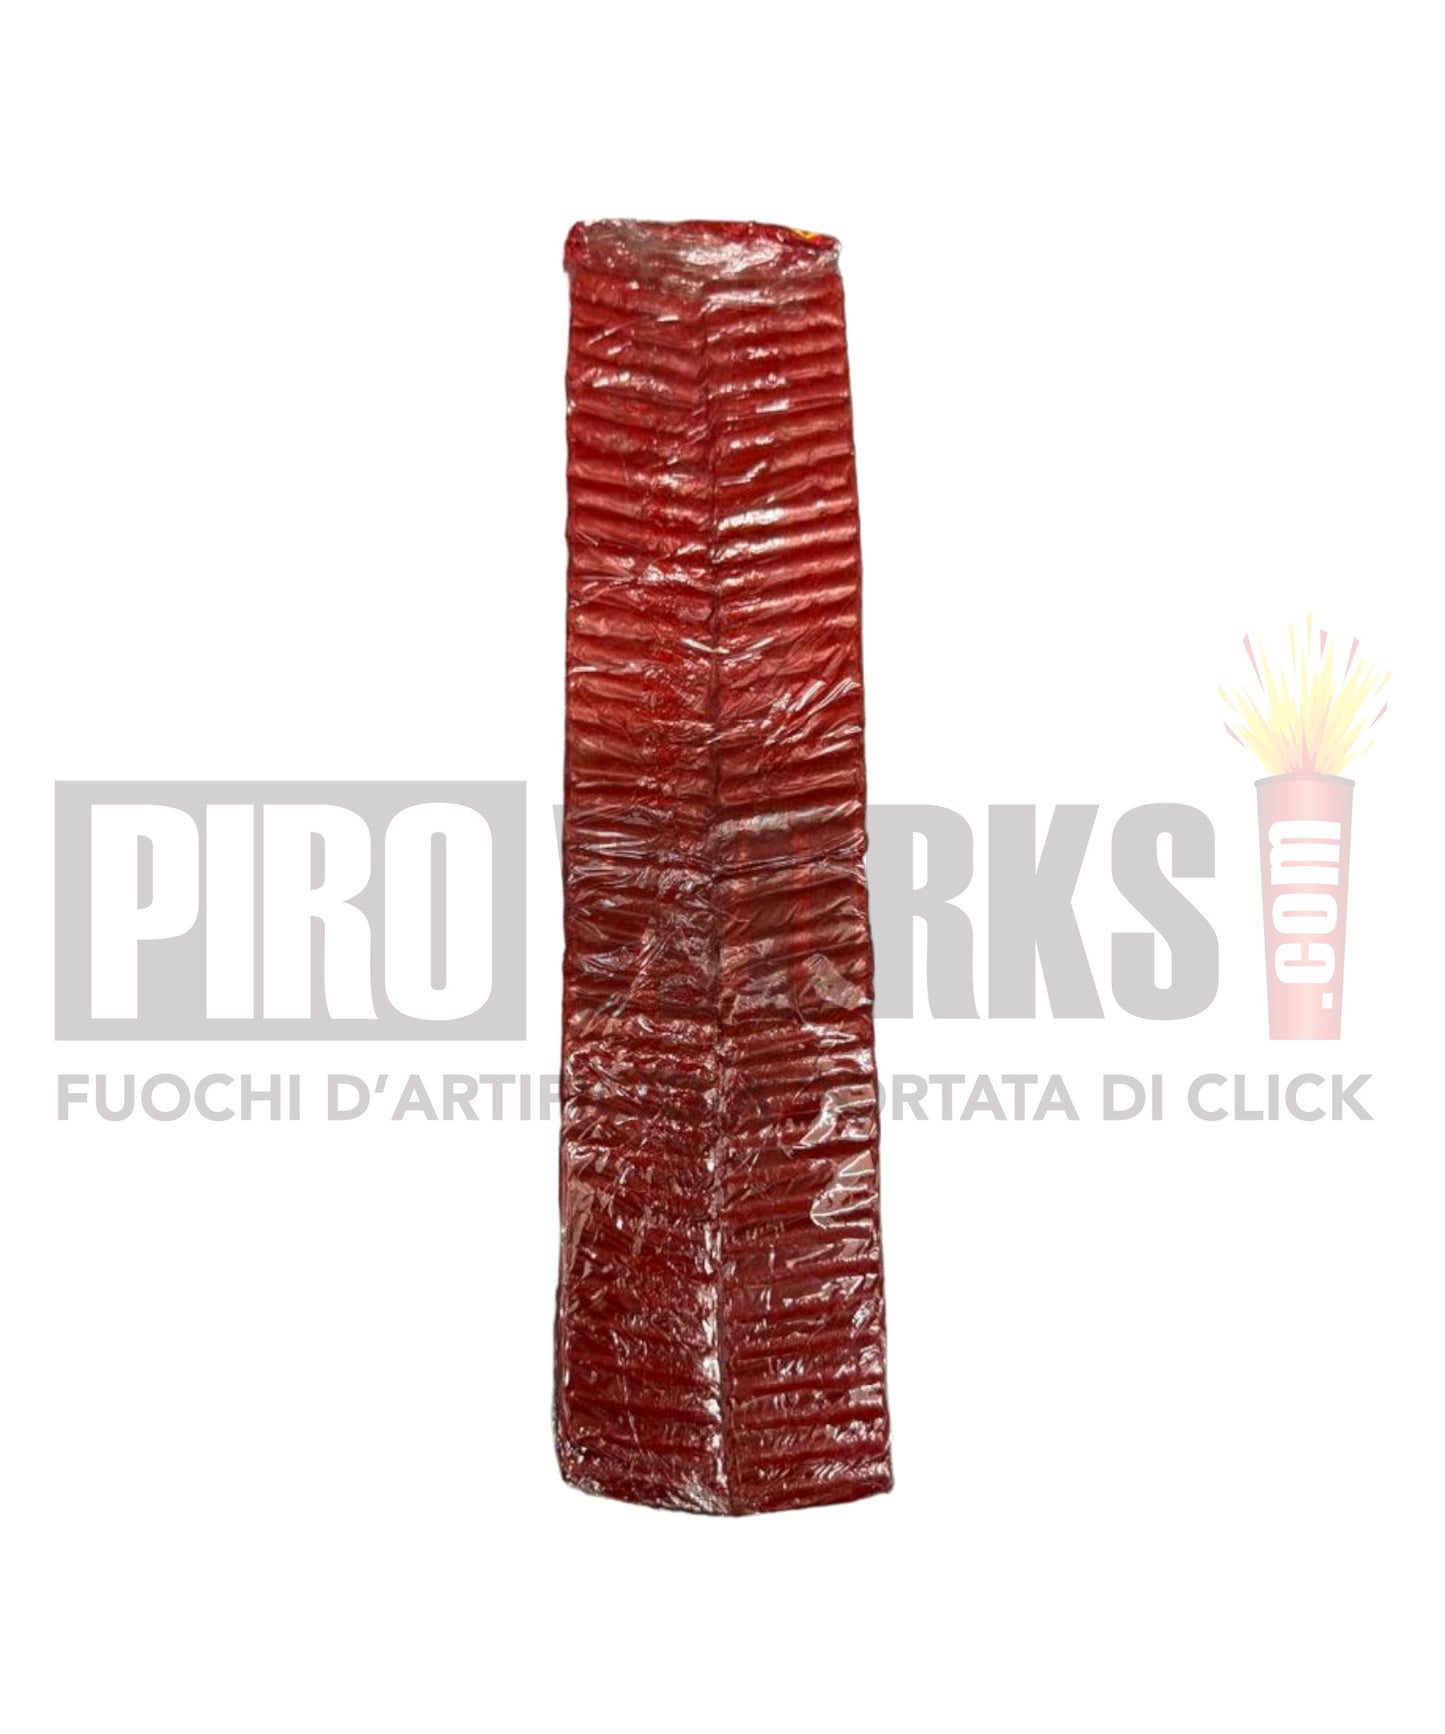 Picchio | Piro Group | 80 Colpi